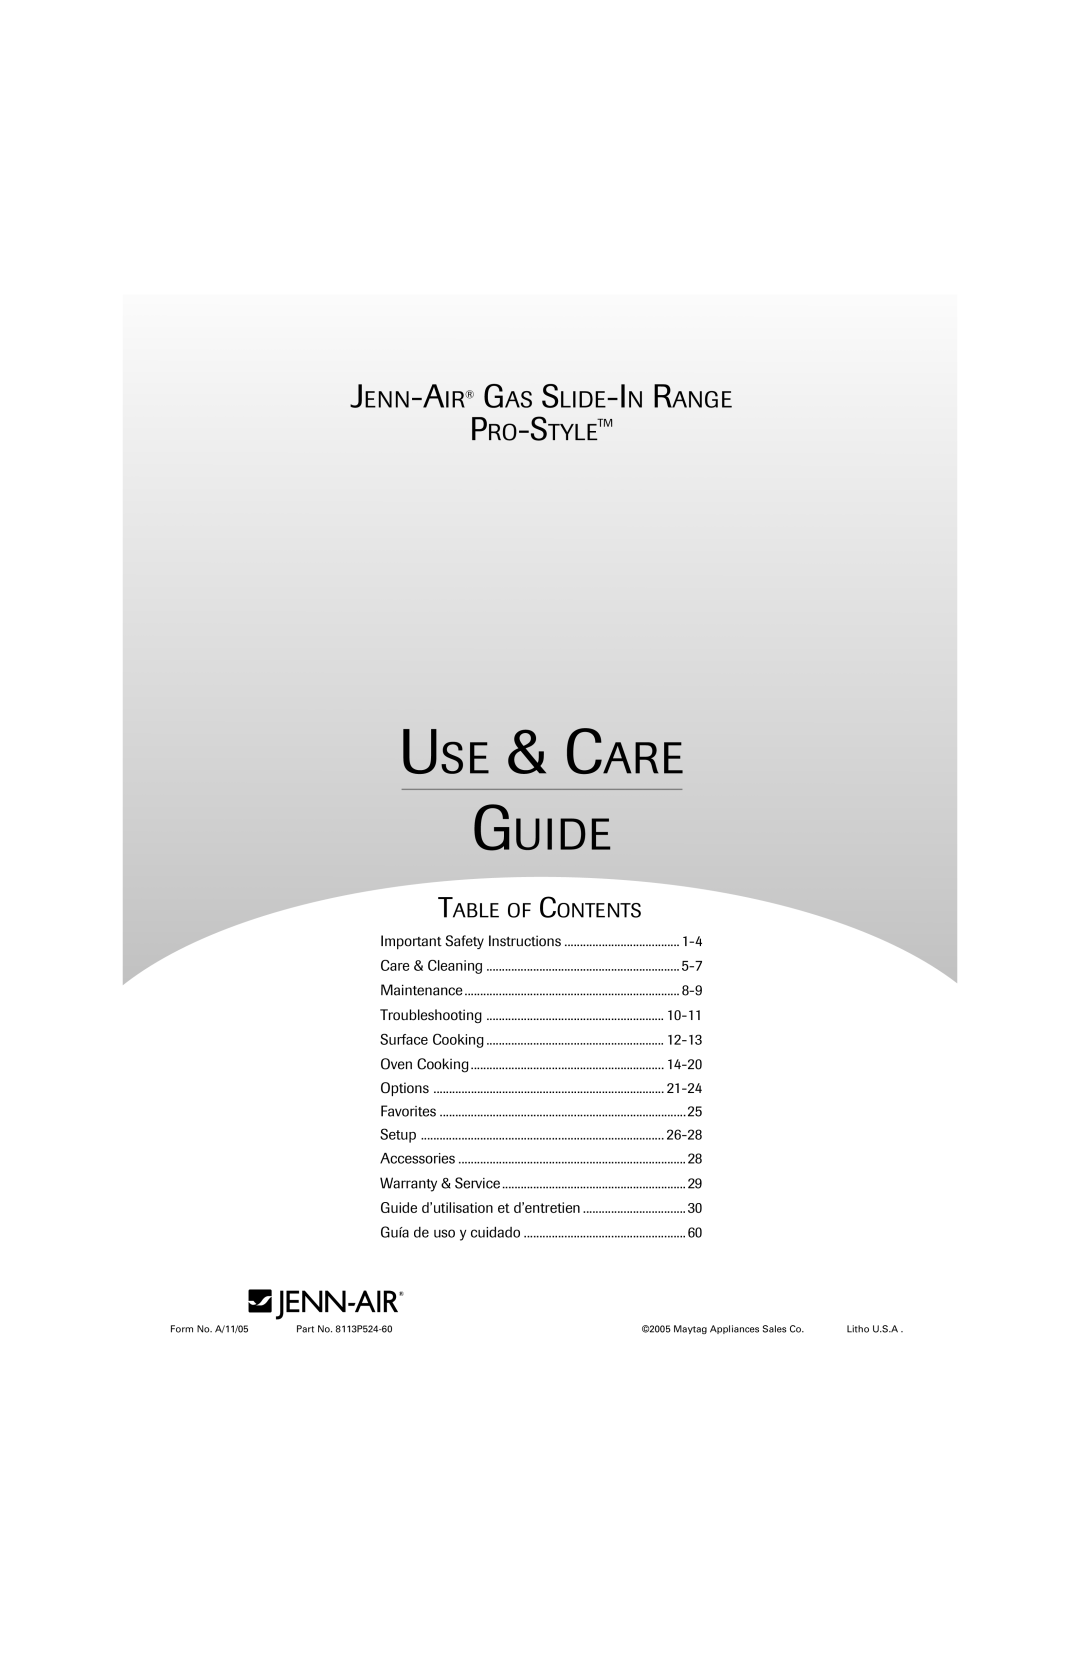 Jenn-Air SLIDE-IN RANGE important safety instructions Use & Care Guide, Jenn-Air Gas Slide-In Range Pro-Styletm 